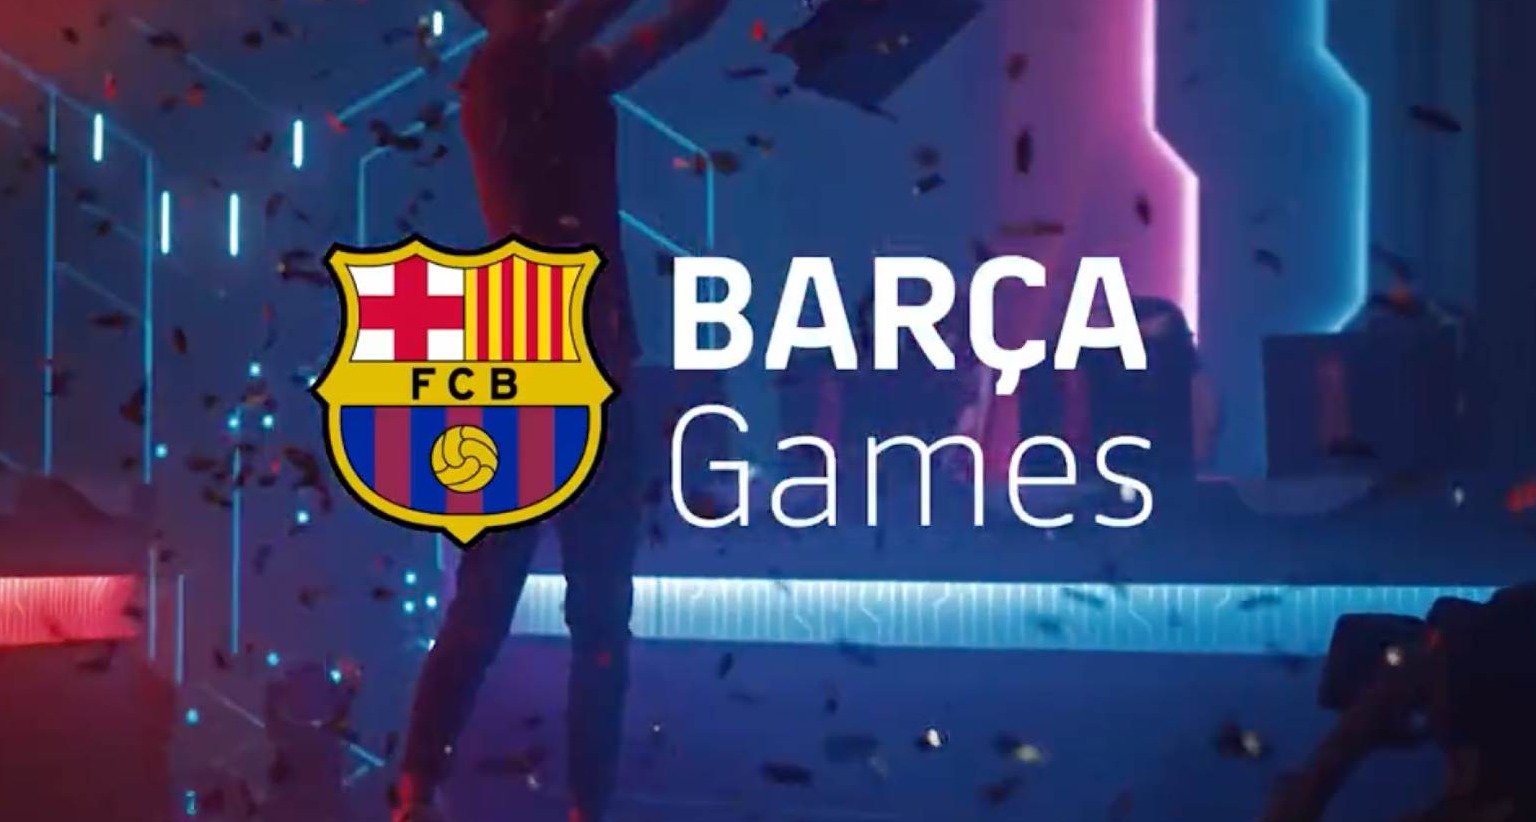 Barça Games